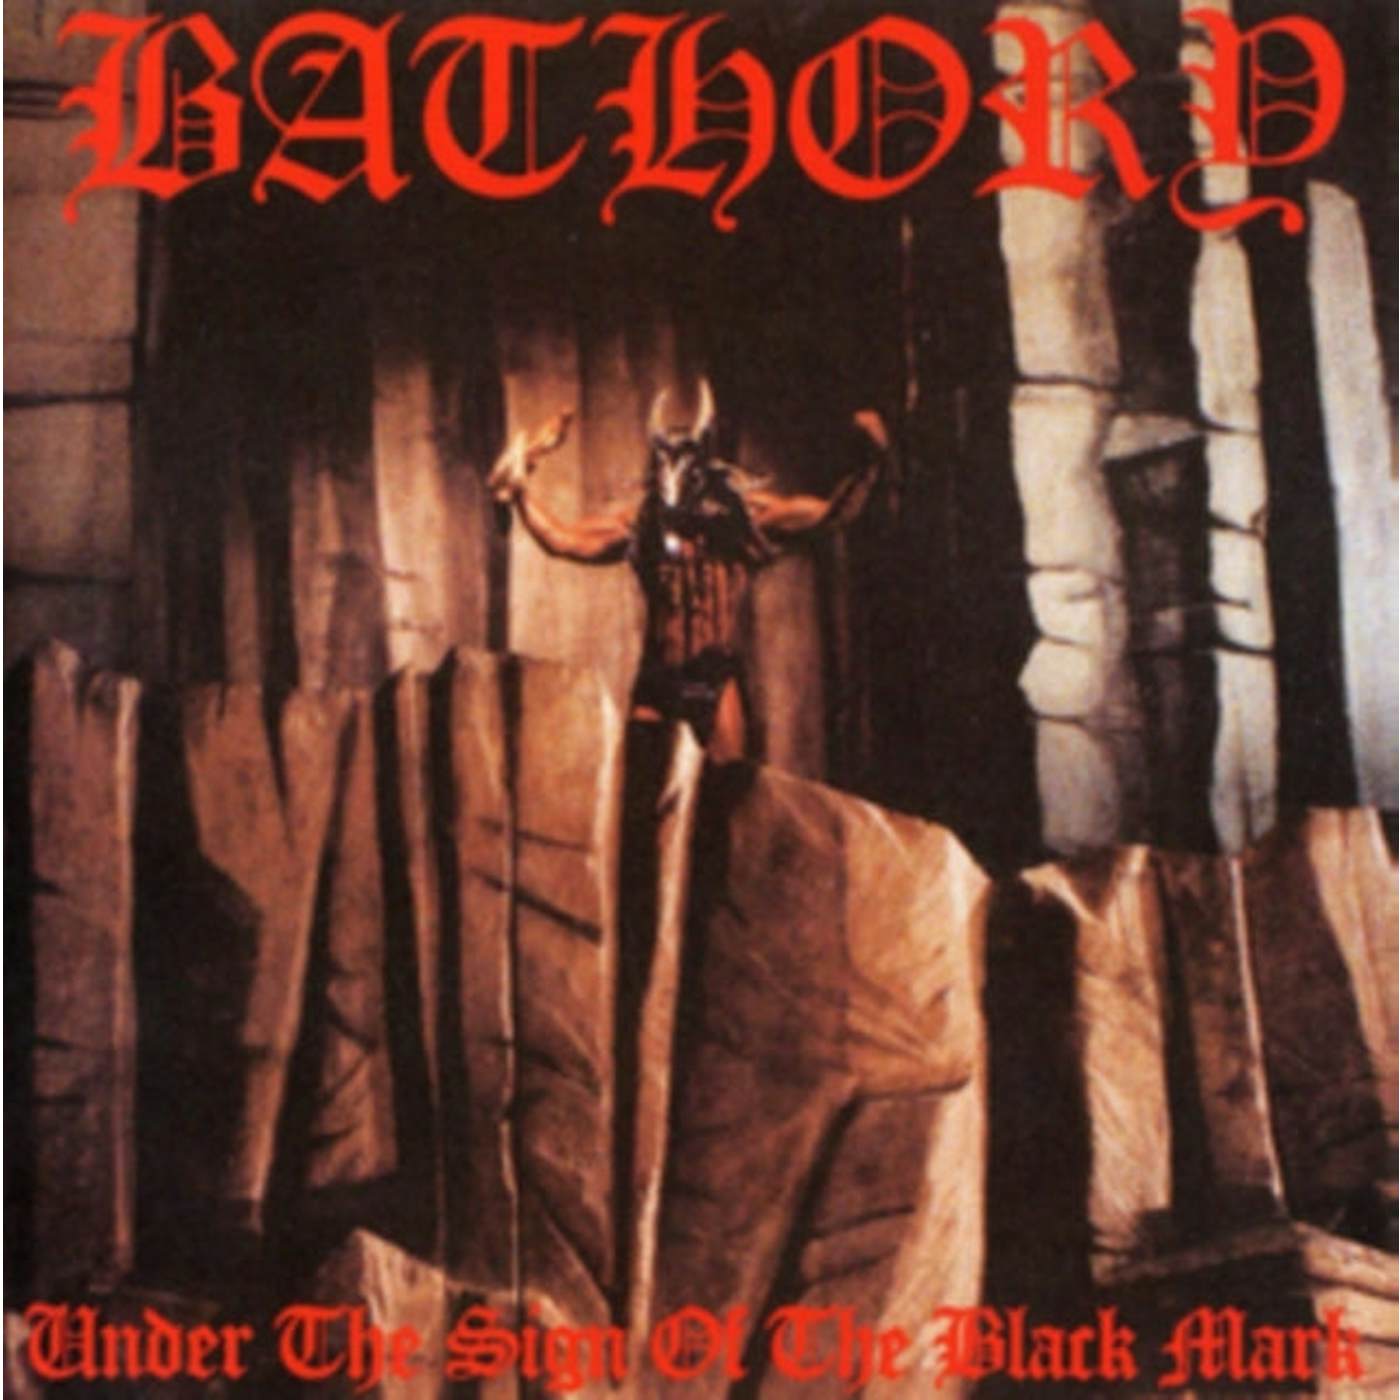 Bathory LP - Under The Sign Of The Black Mark (Vinyl)